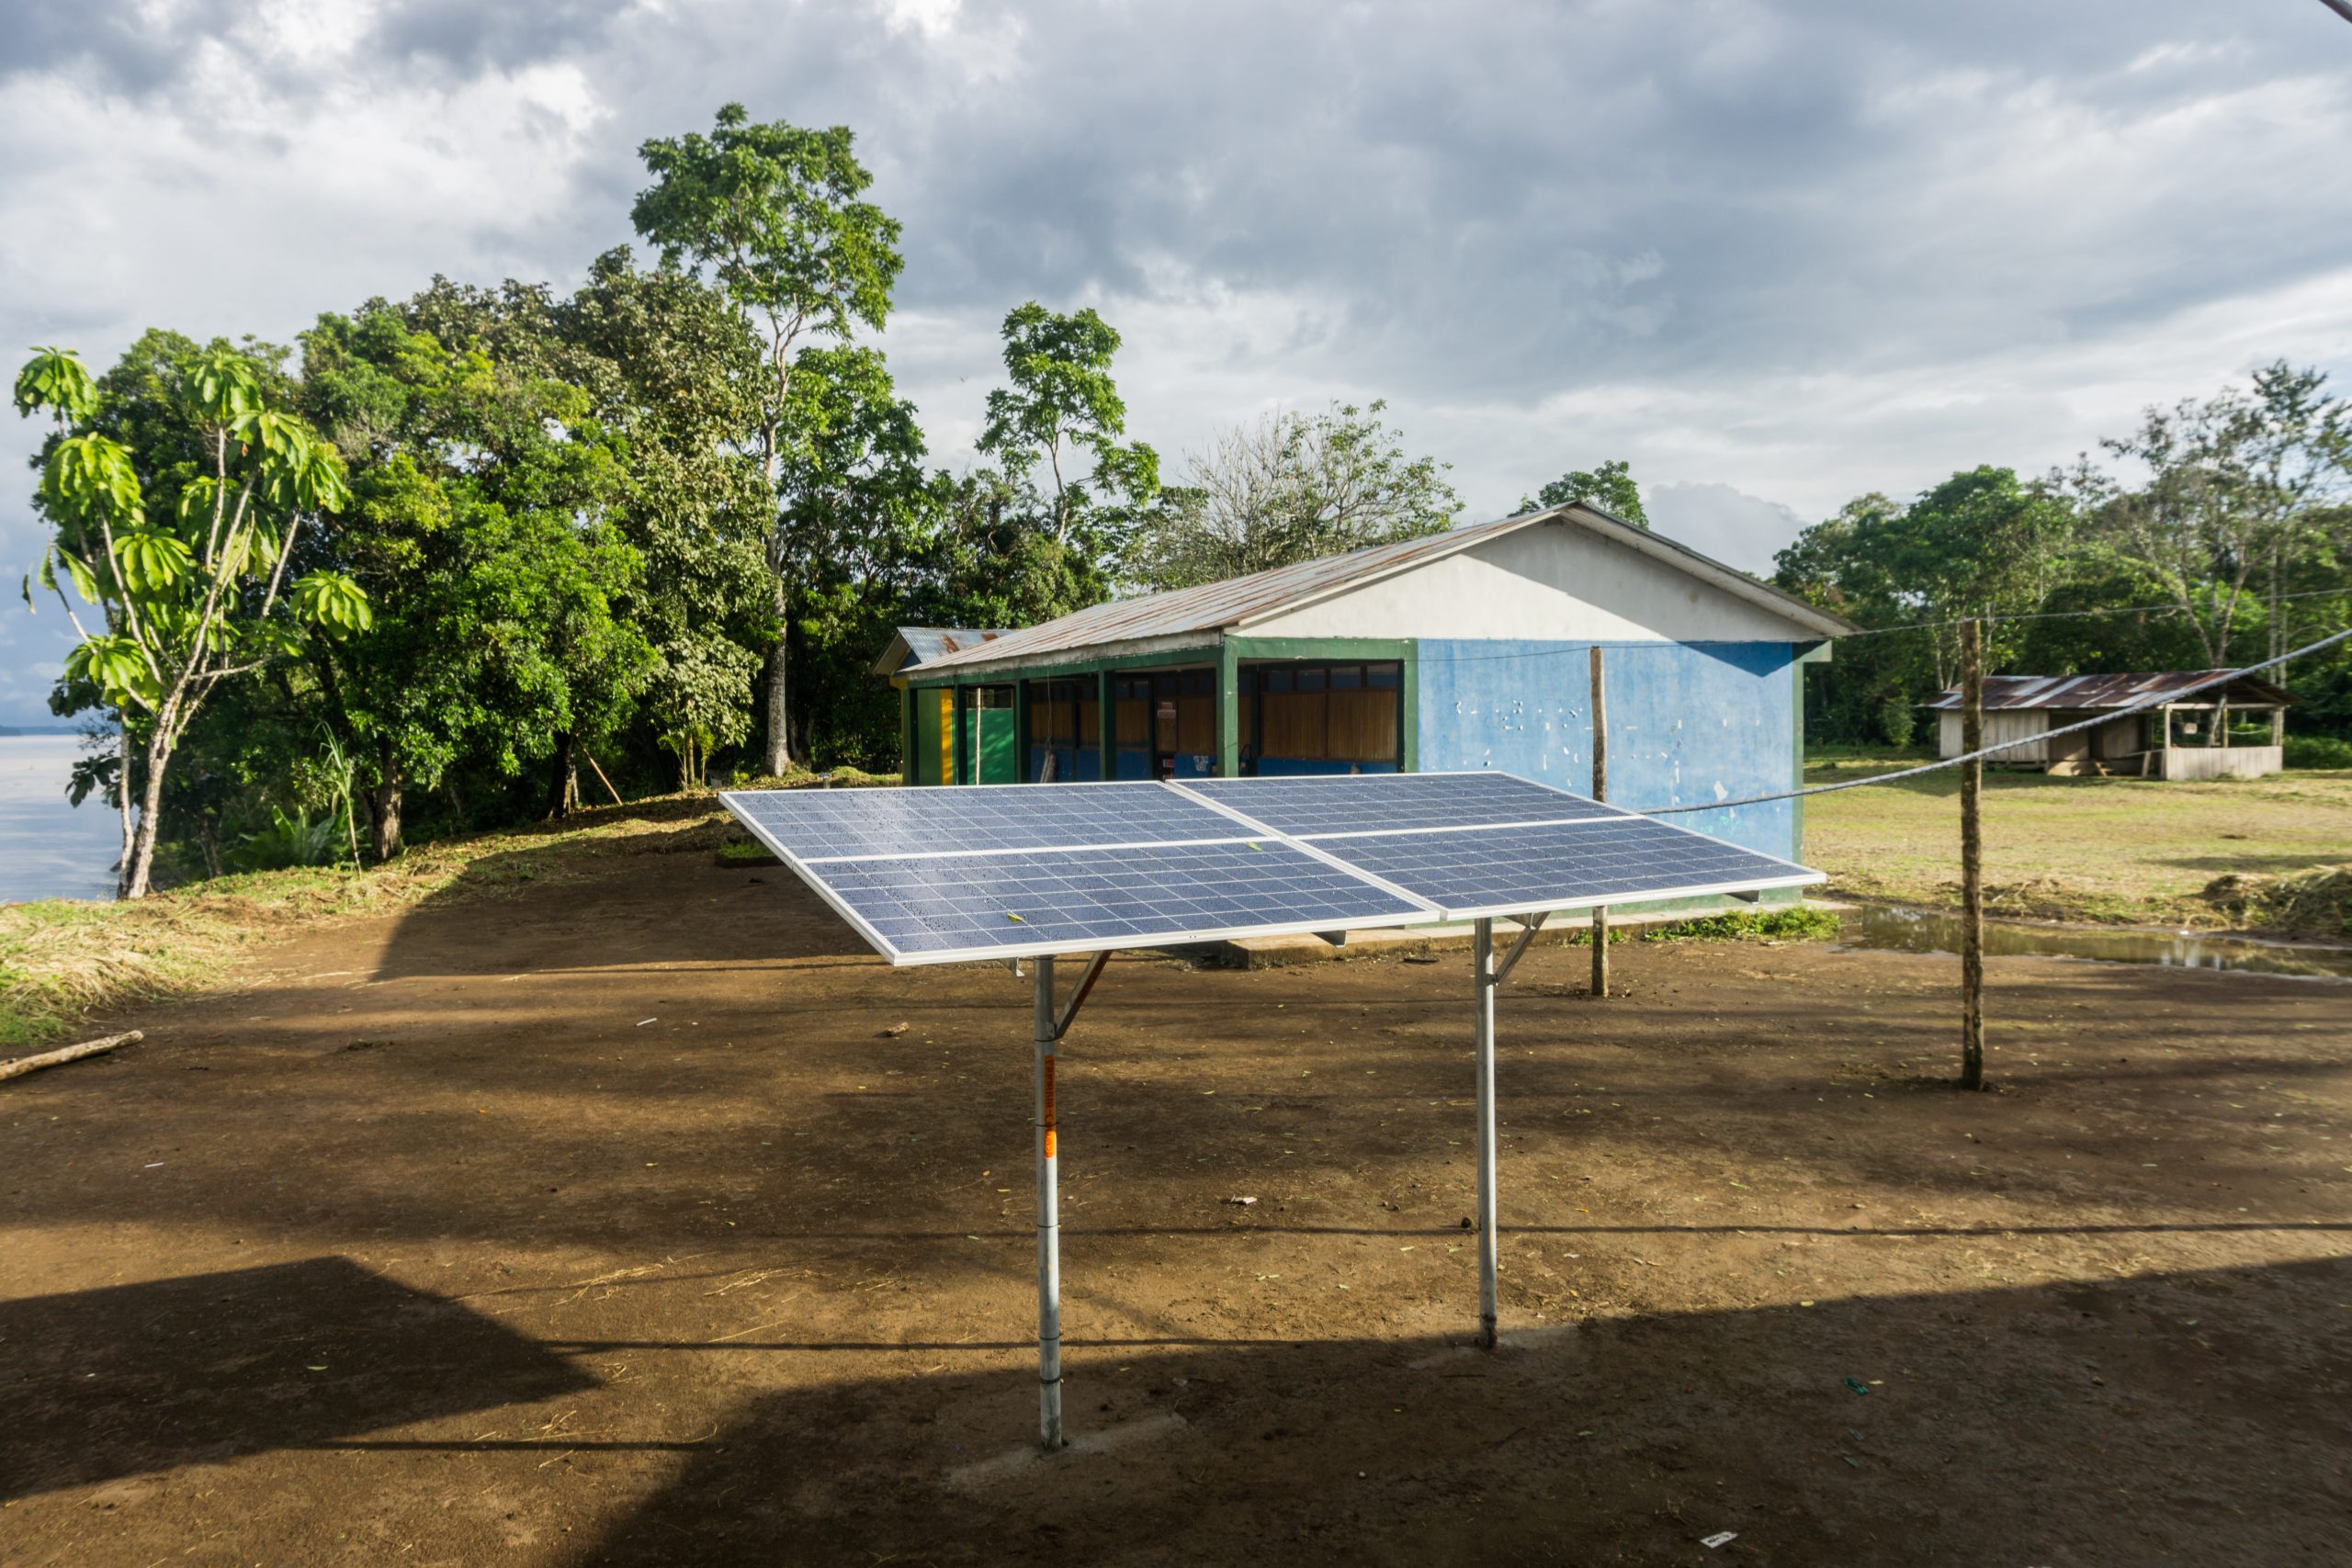 A solar panel in a community in the Peruvian Amazon